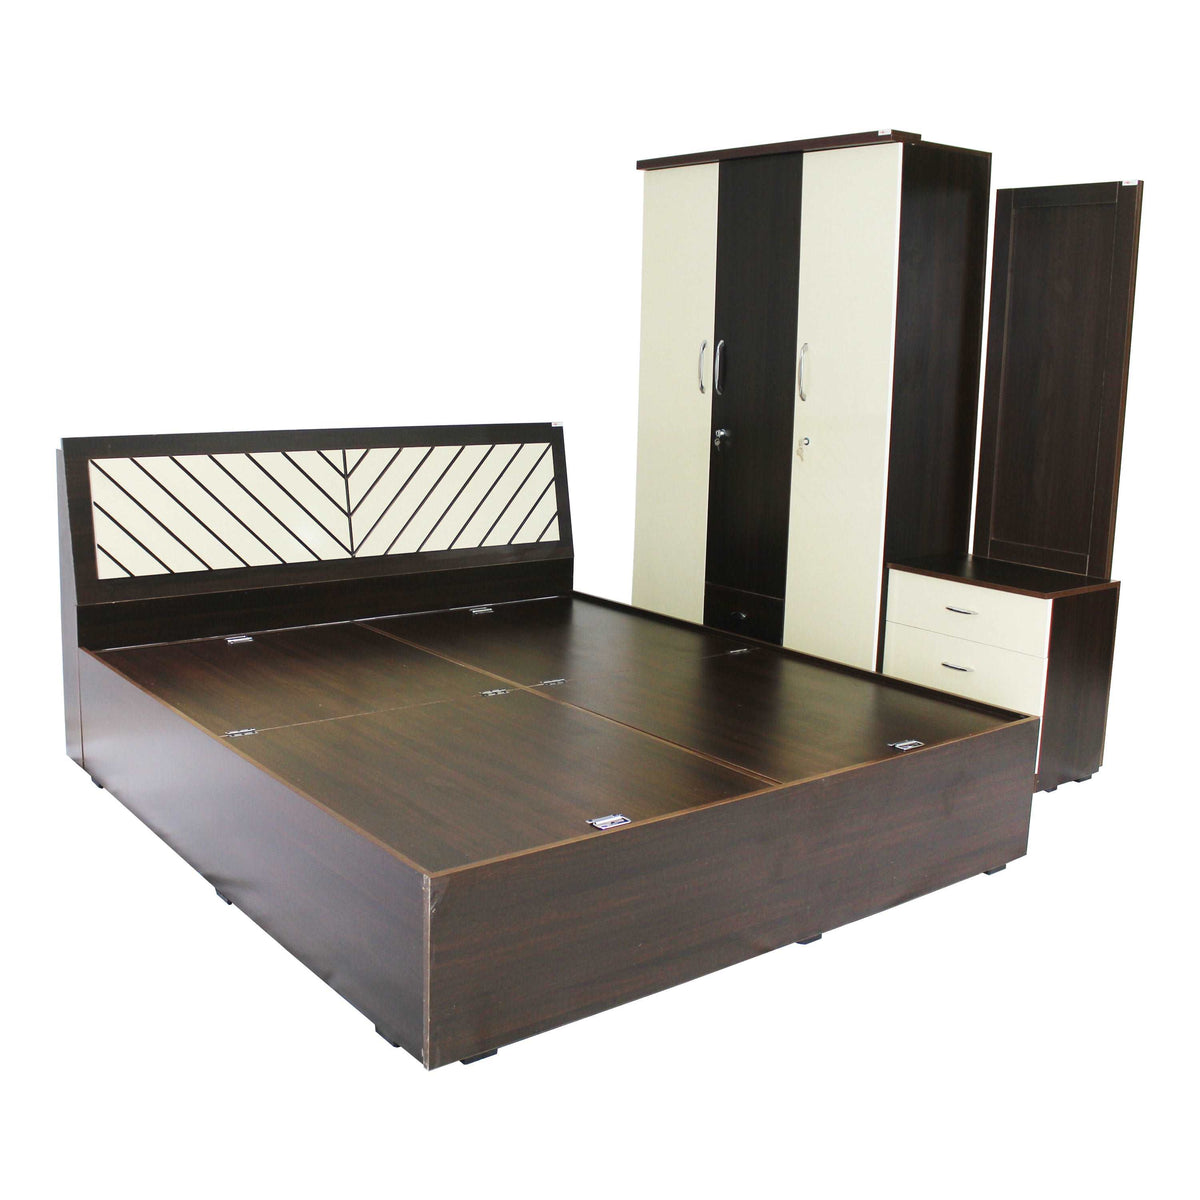 Stunning Wooden Dressing Table Designs for Bedroom | Nilkamal At-home @home